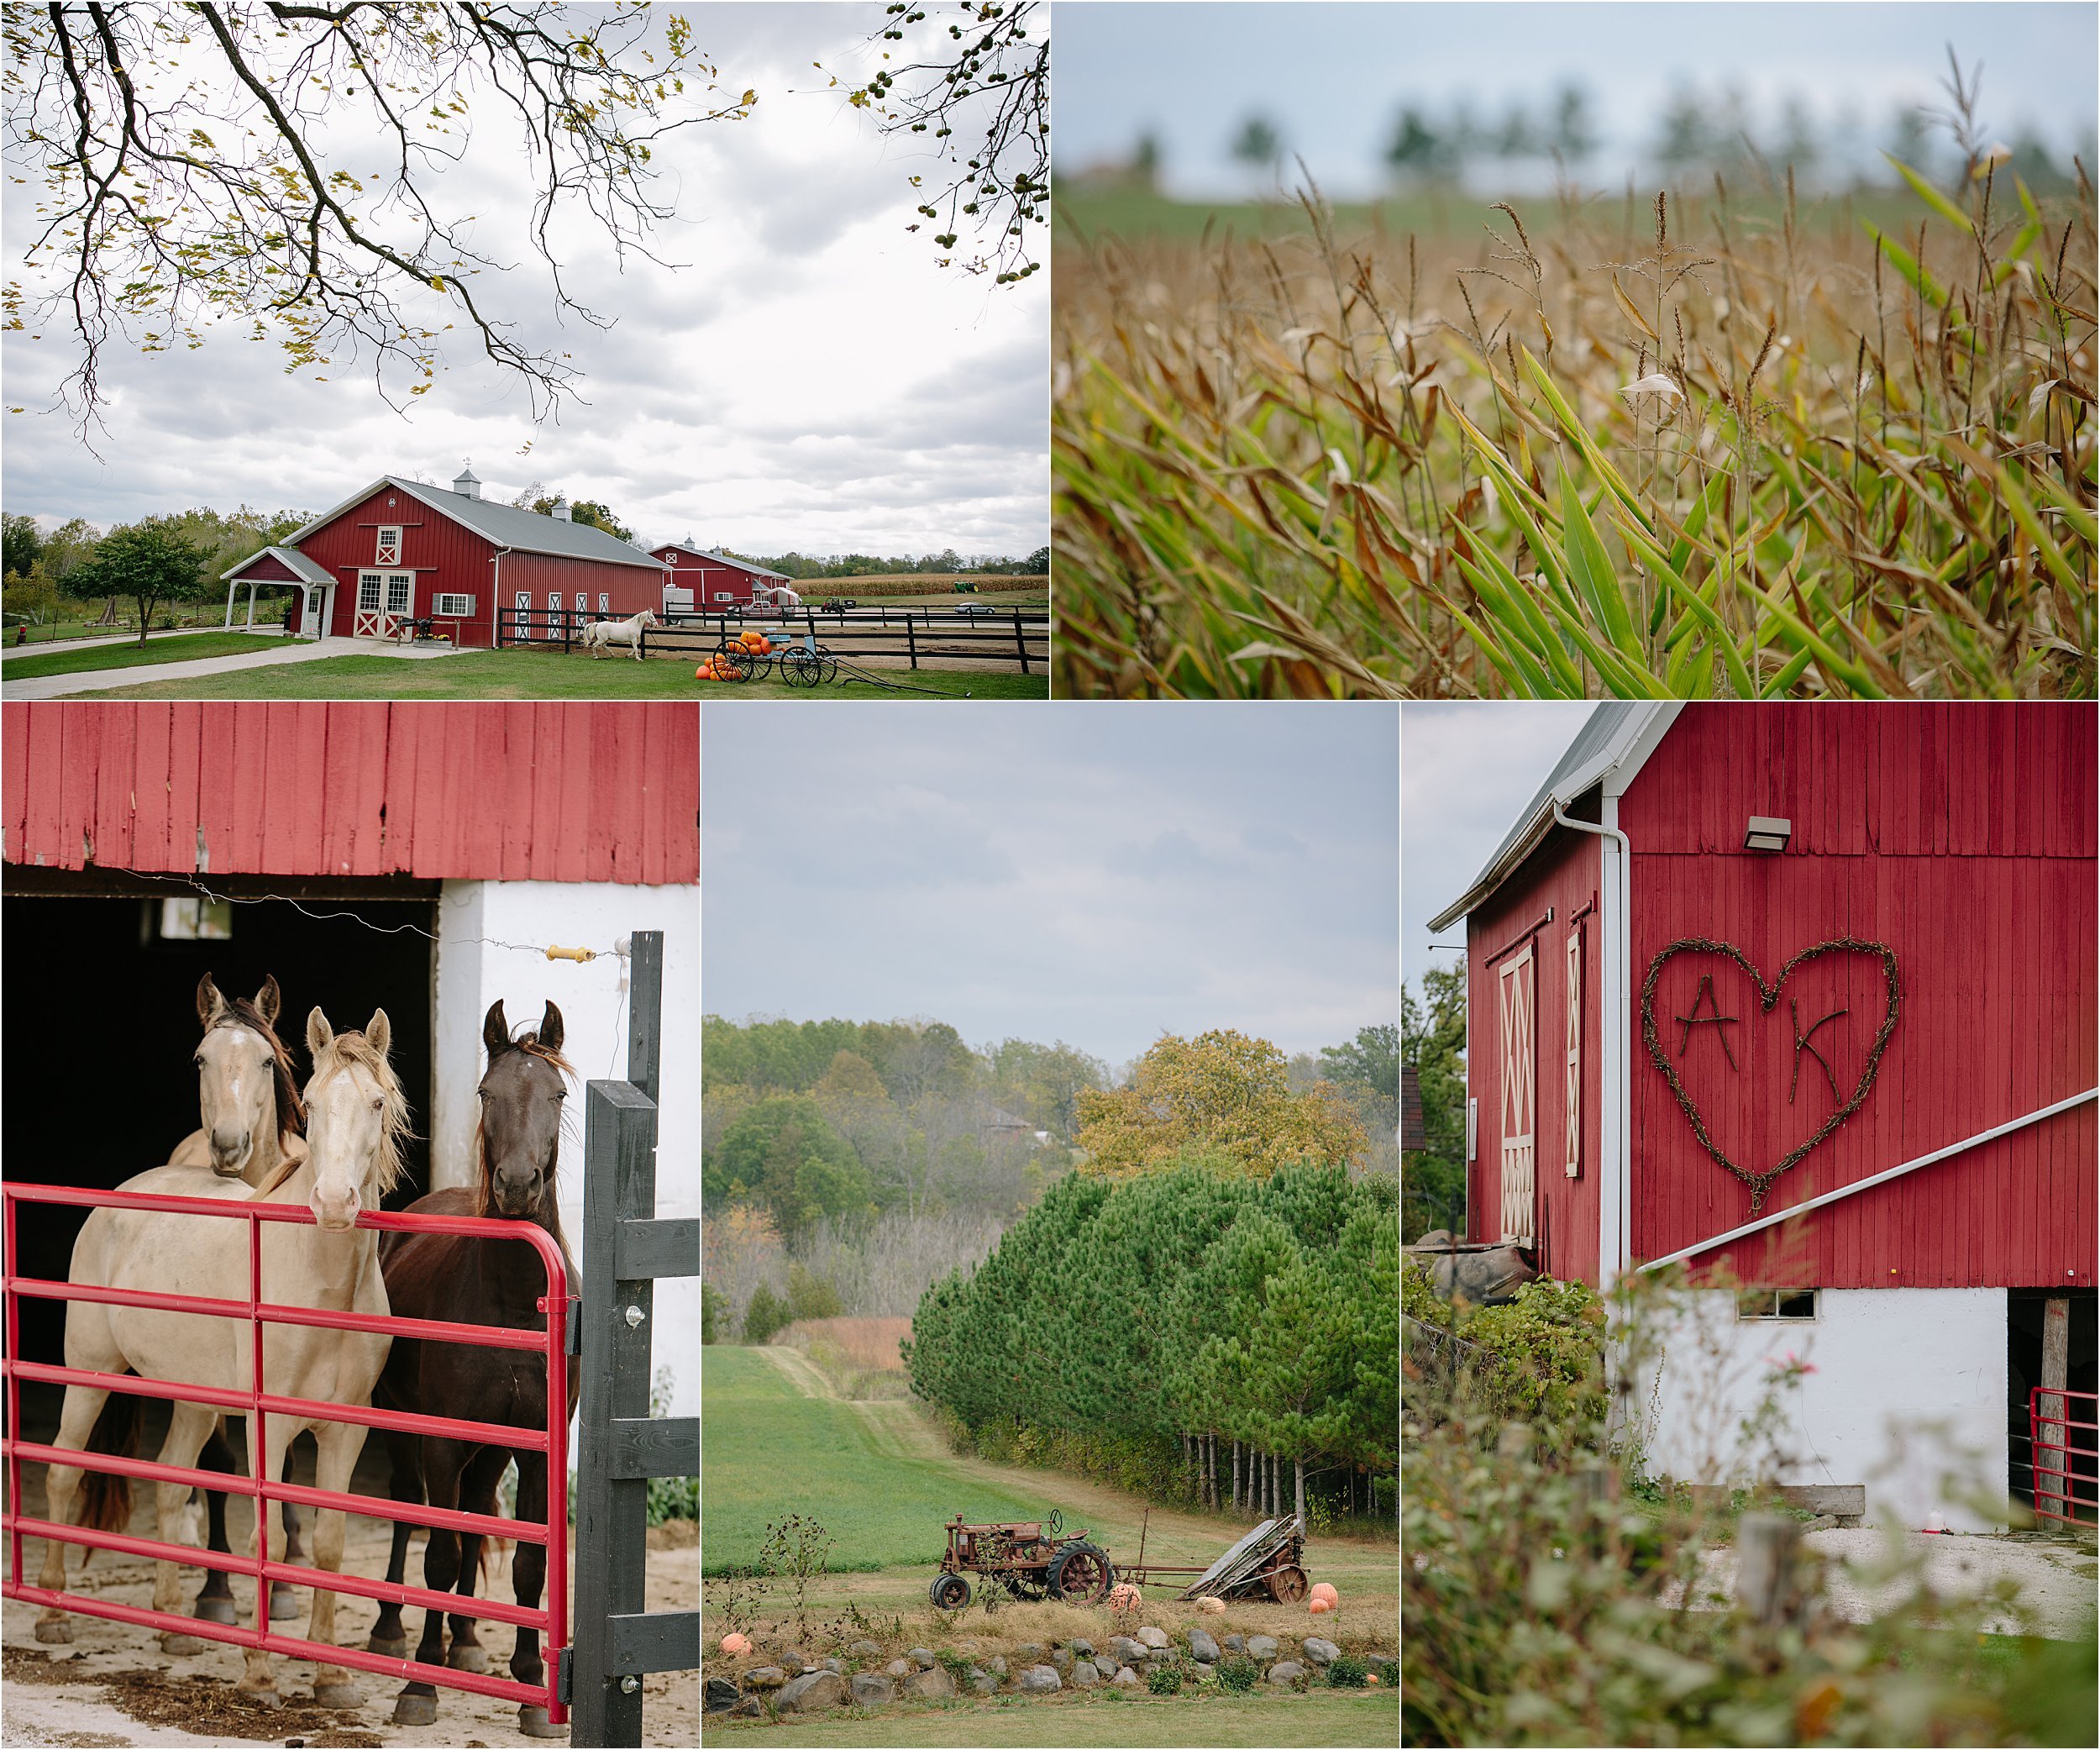 01-red-barn-horses-cornfield.JPG